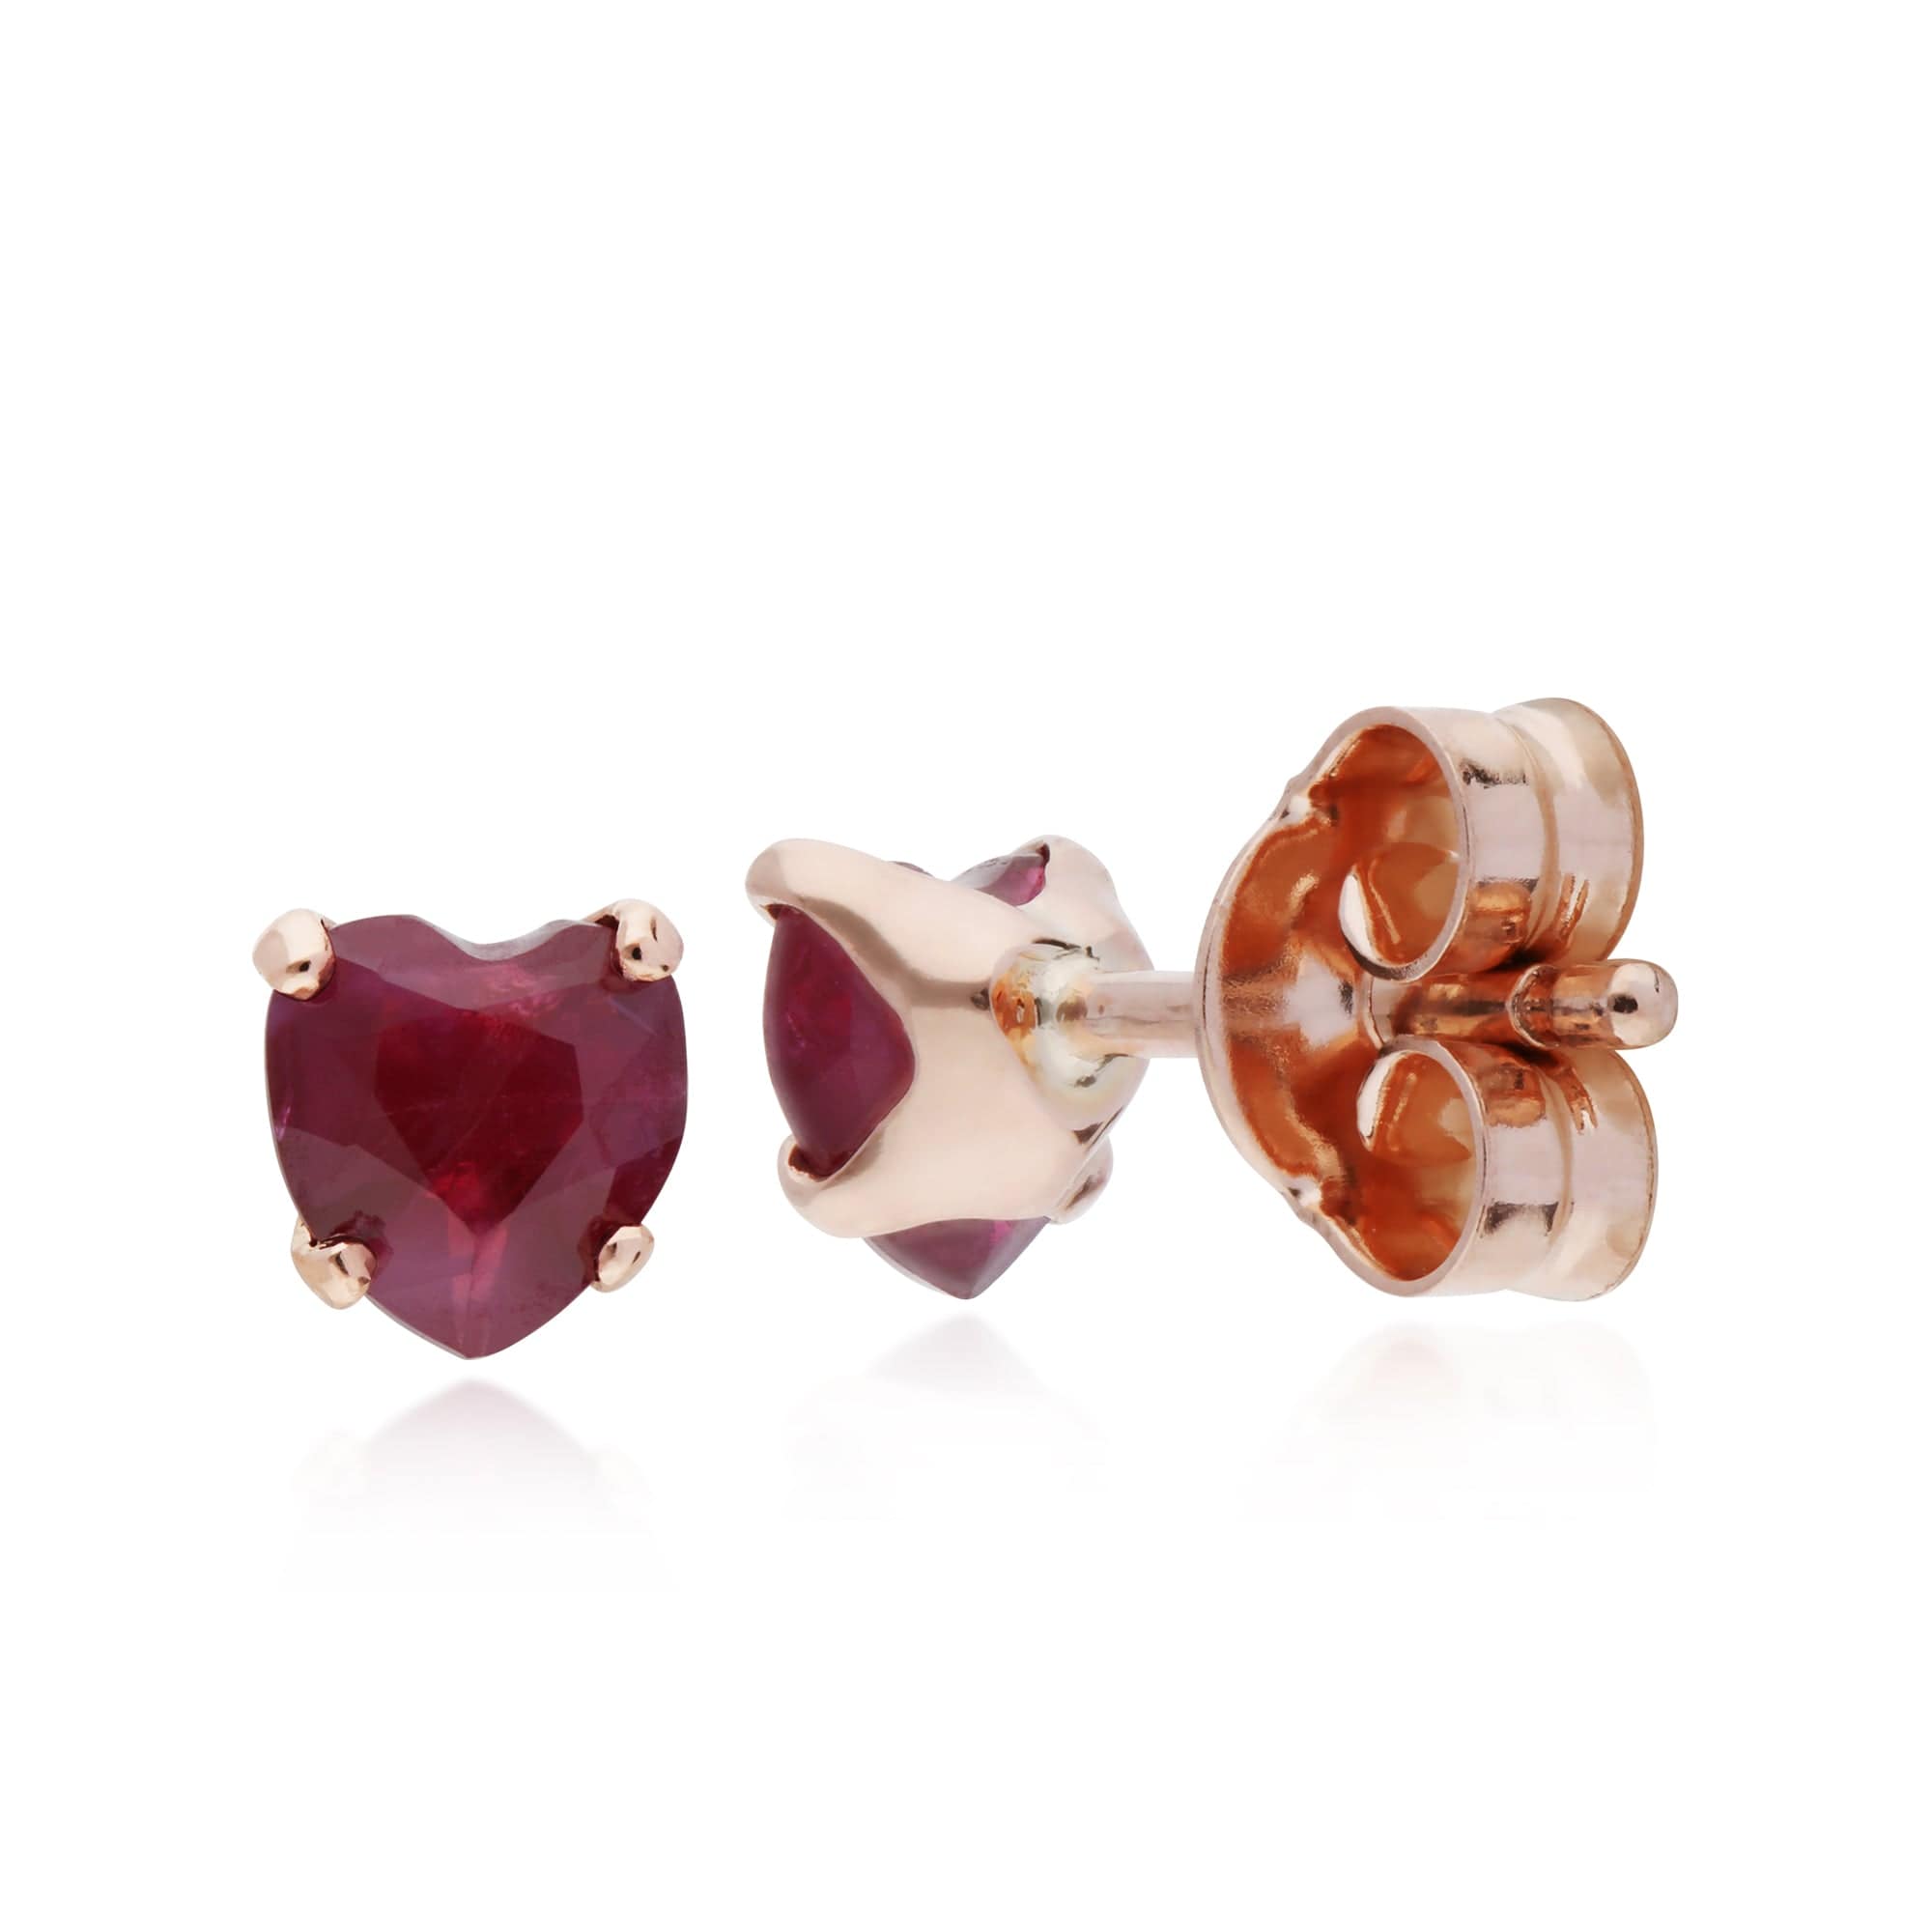 Petite Heart Ruby Stud Earrings in 9ct Rose Gold - Gemondo